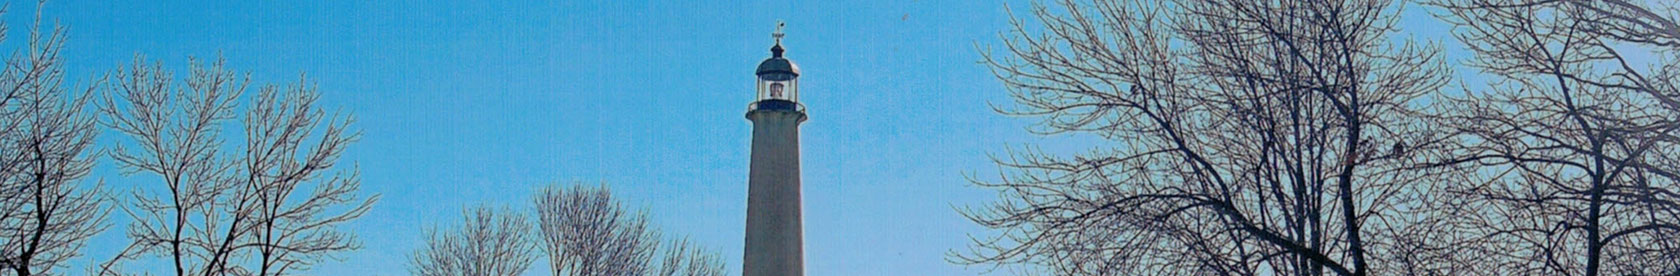 LIA to Preserve Northwood Lighthouse